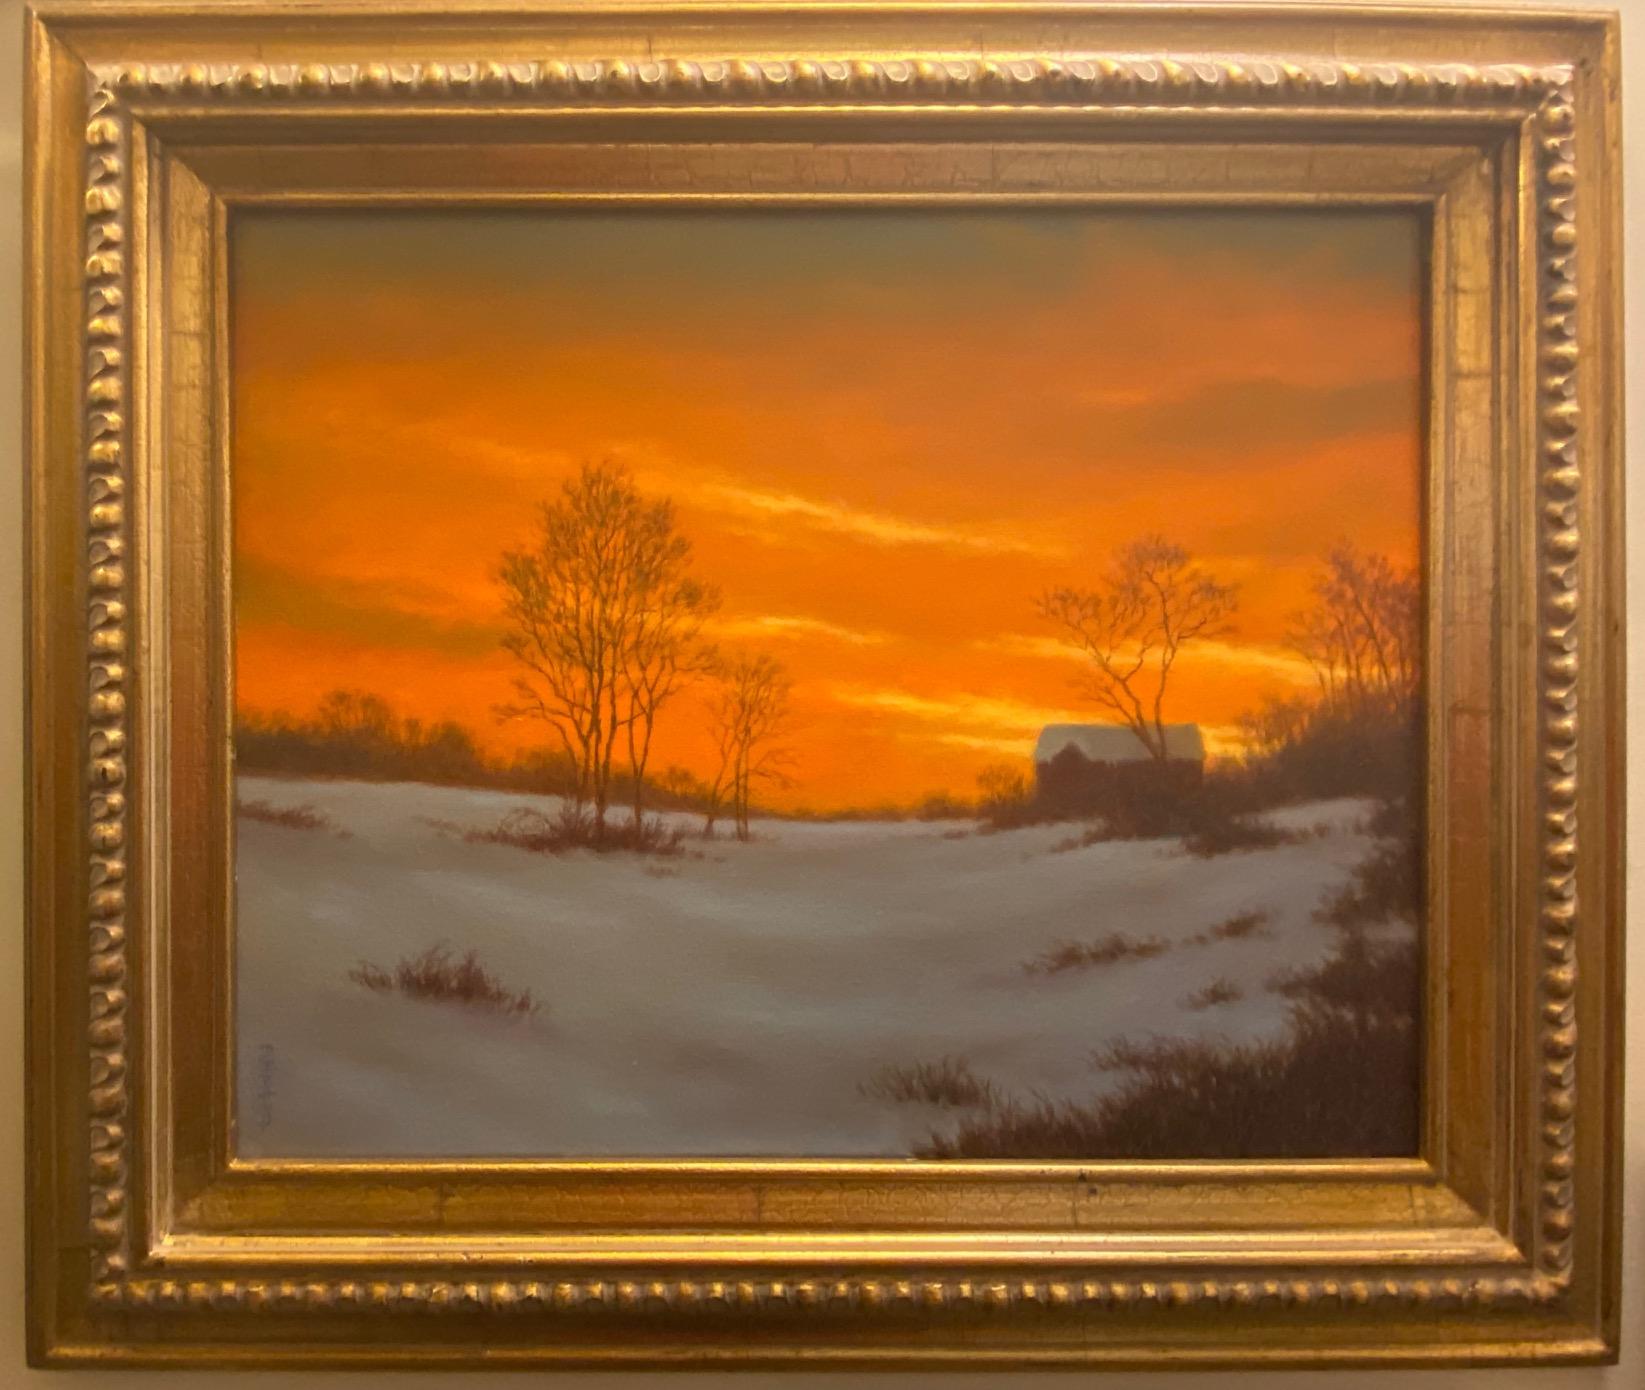 Barry DeBaun Landscape Painting - Evening Glory, original Hudson River School impressionist landscape